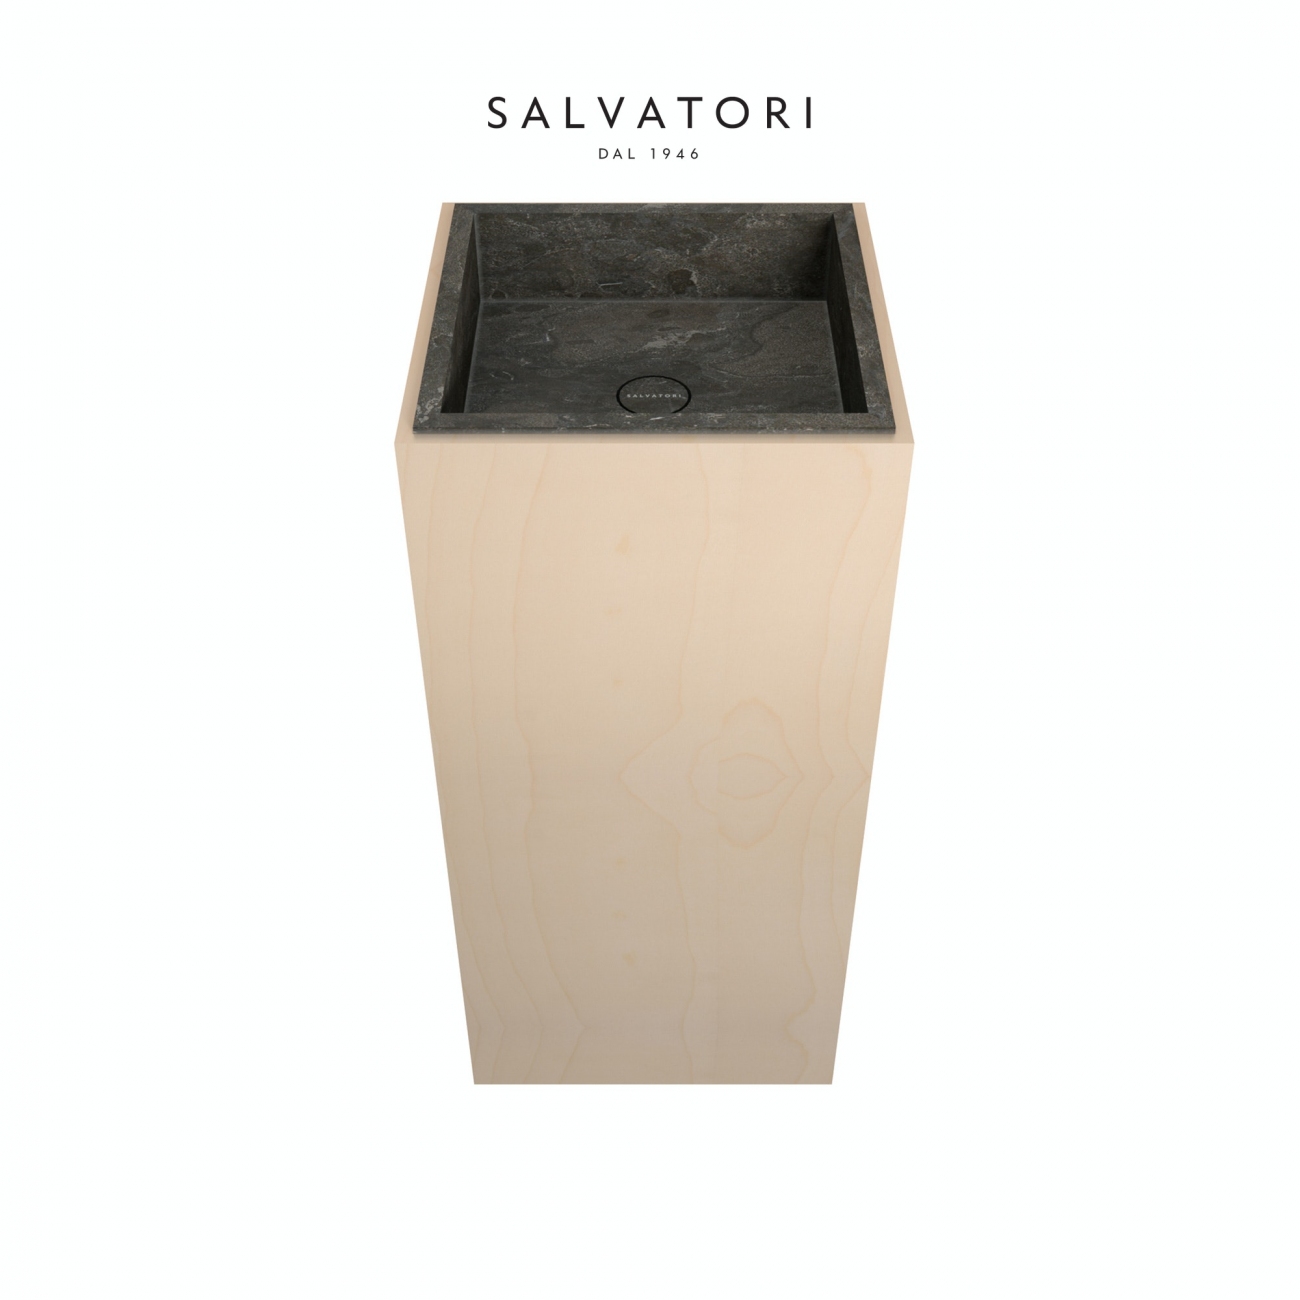 Salvatori Adda Freestanding Sink Acero 41X41